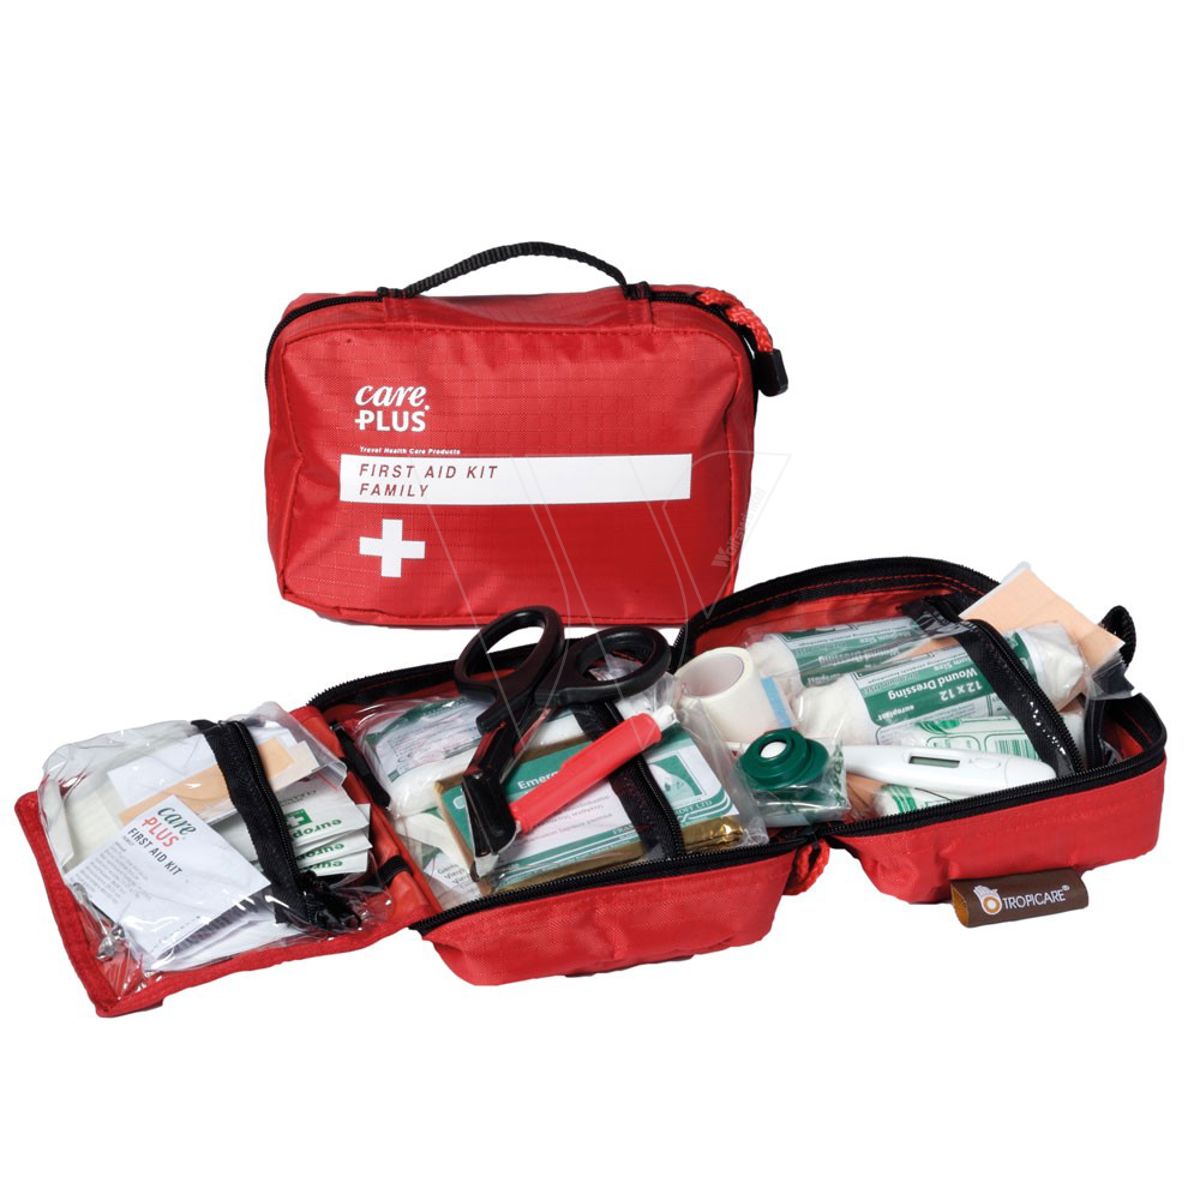 bereik Analist Hymne Care plus® first aid kit family ** 38325 kopen? | Wolfswinkel uw Care plus  specialist